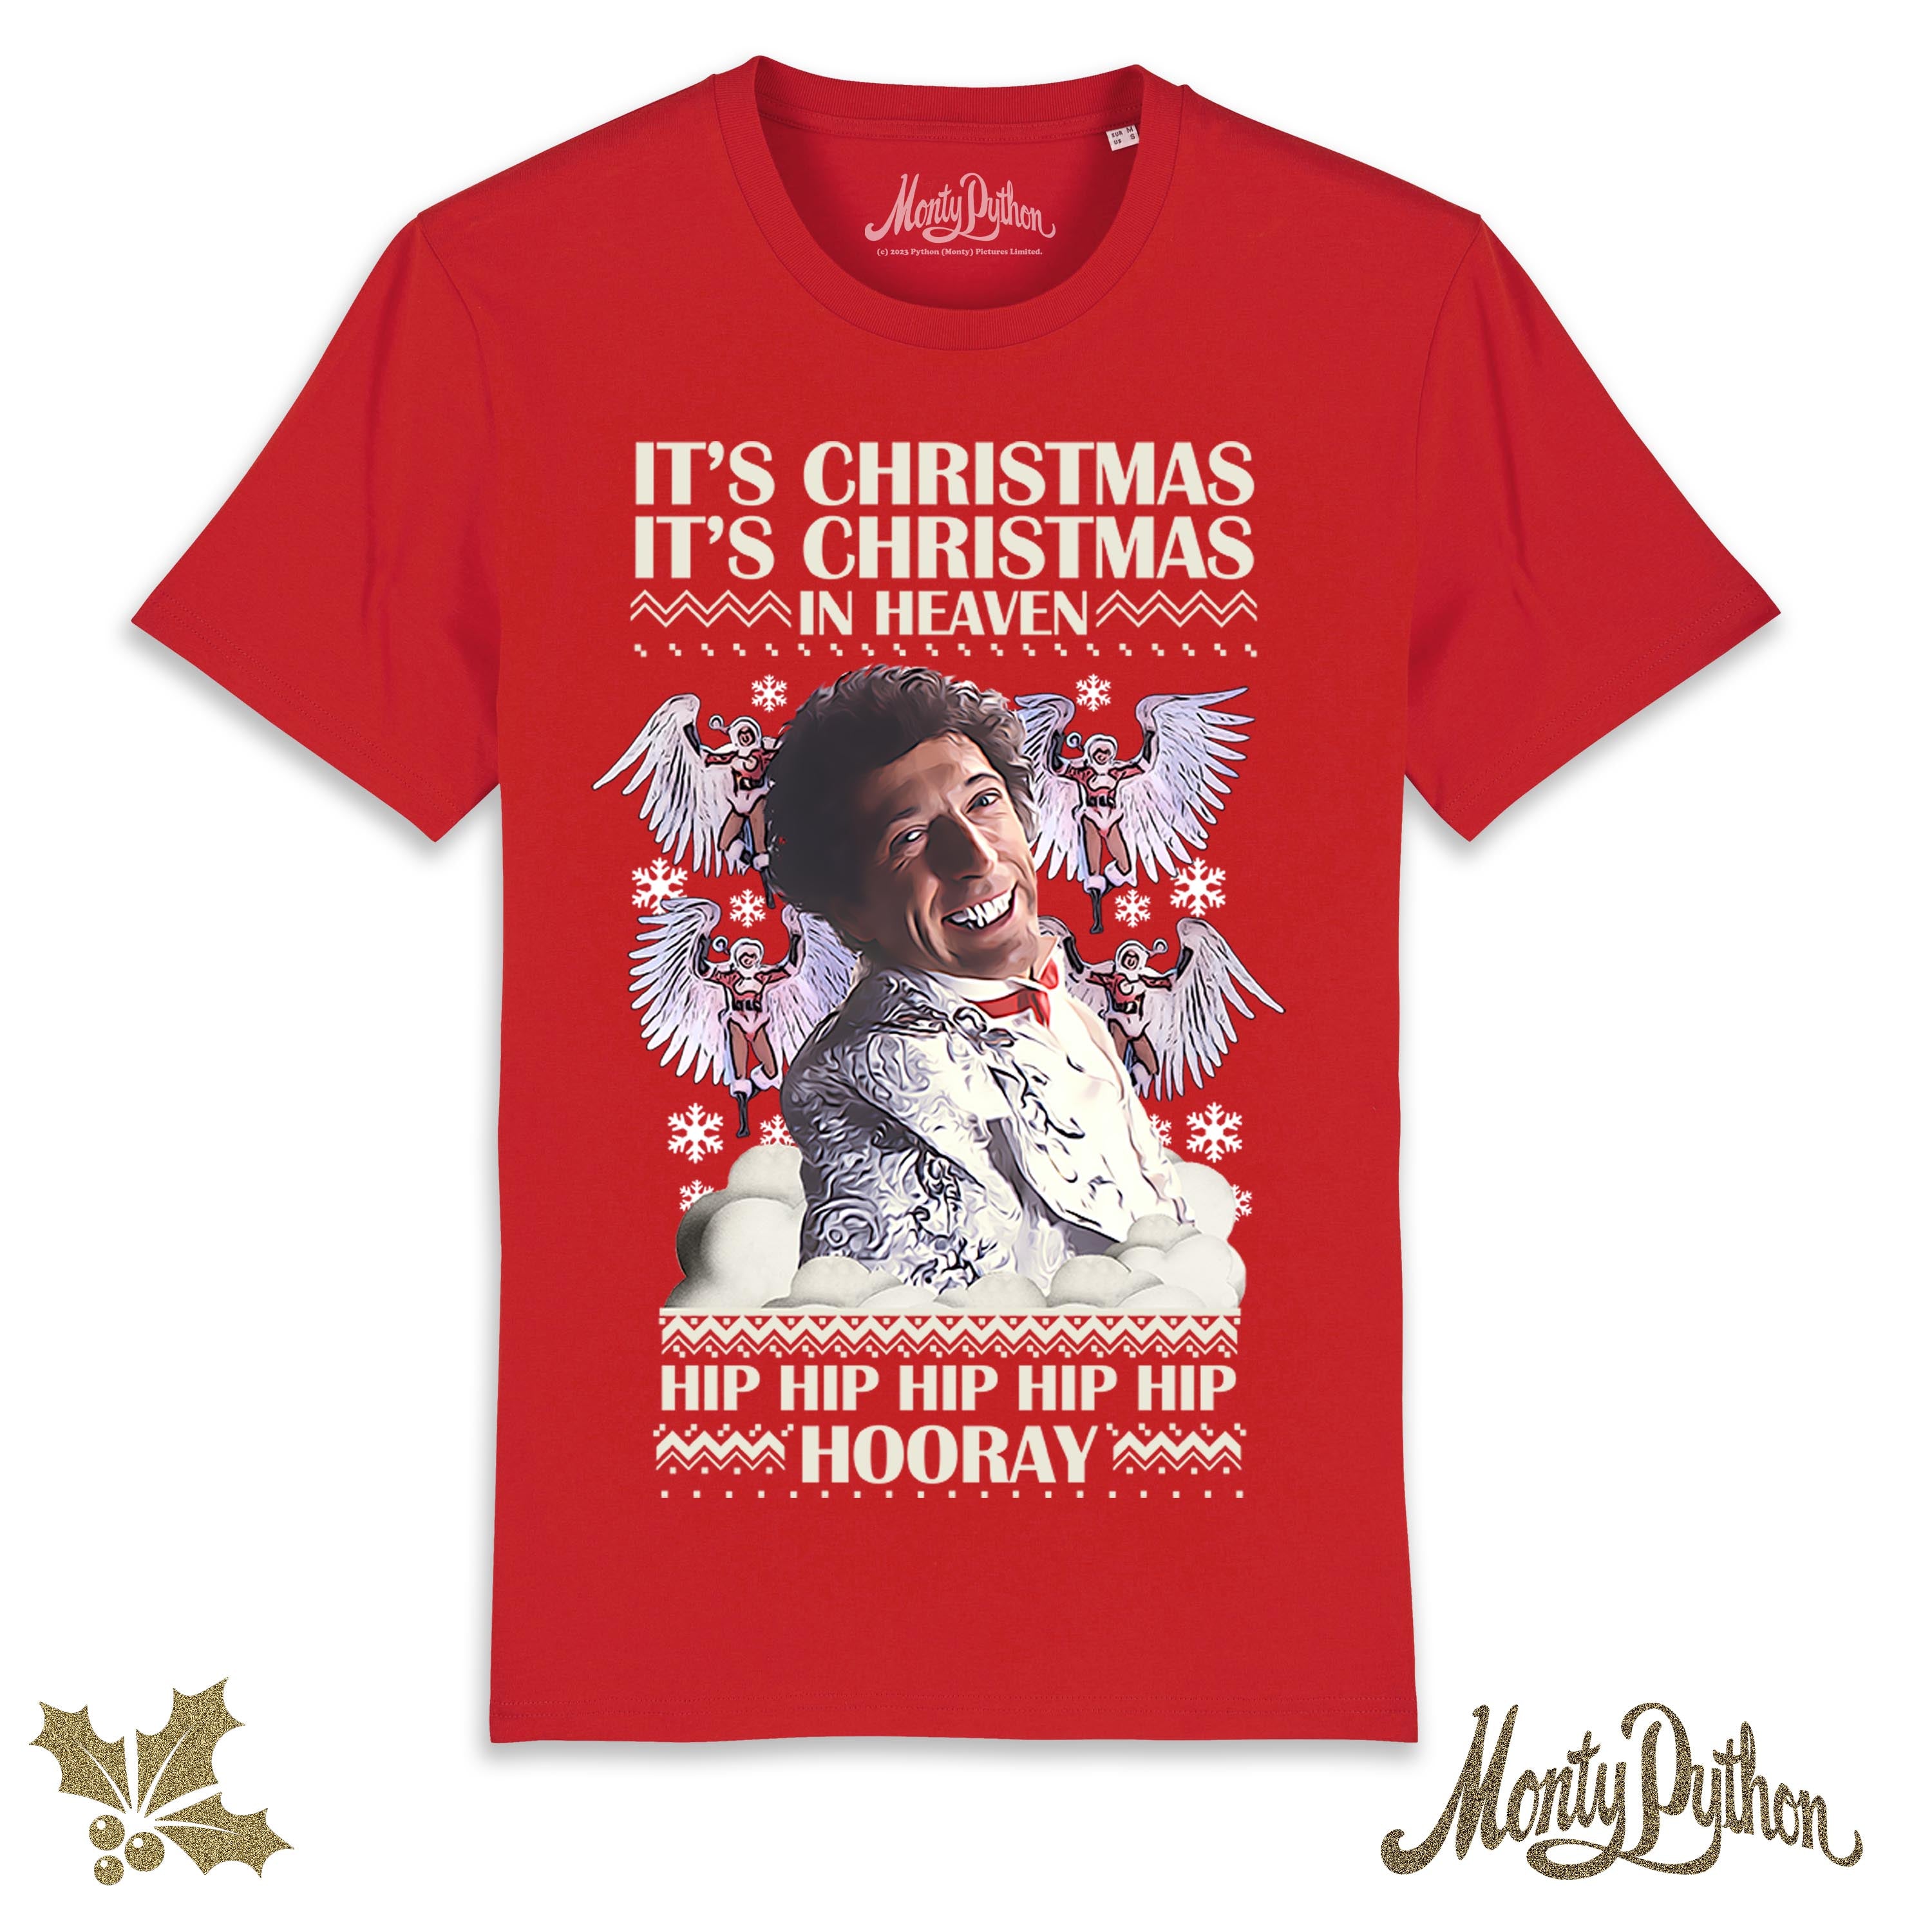 Monty Python - Monty Python Christmas In Heaven Tee